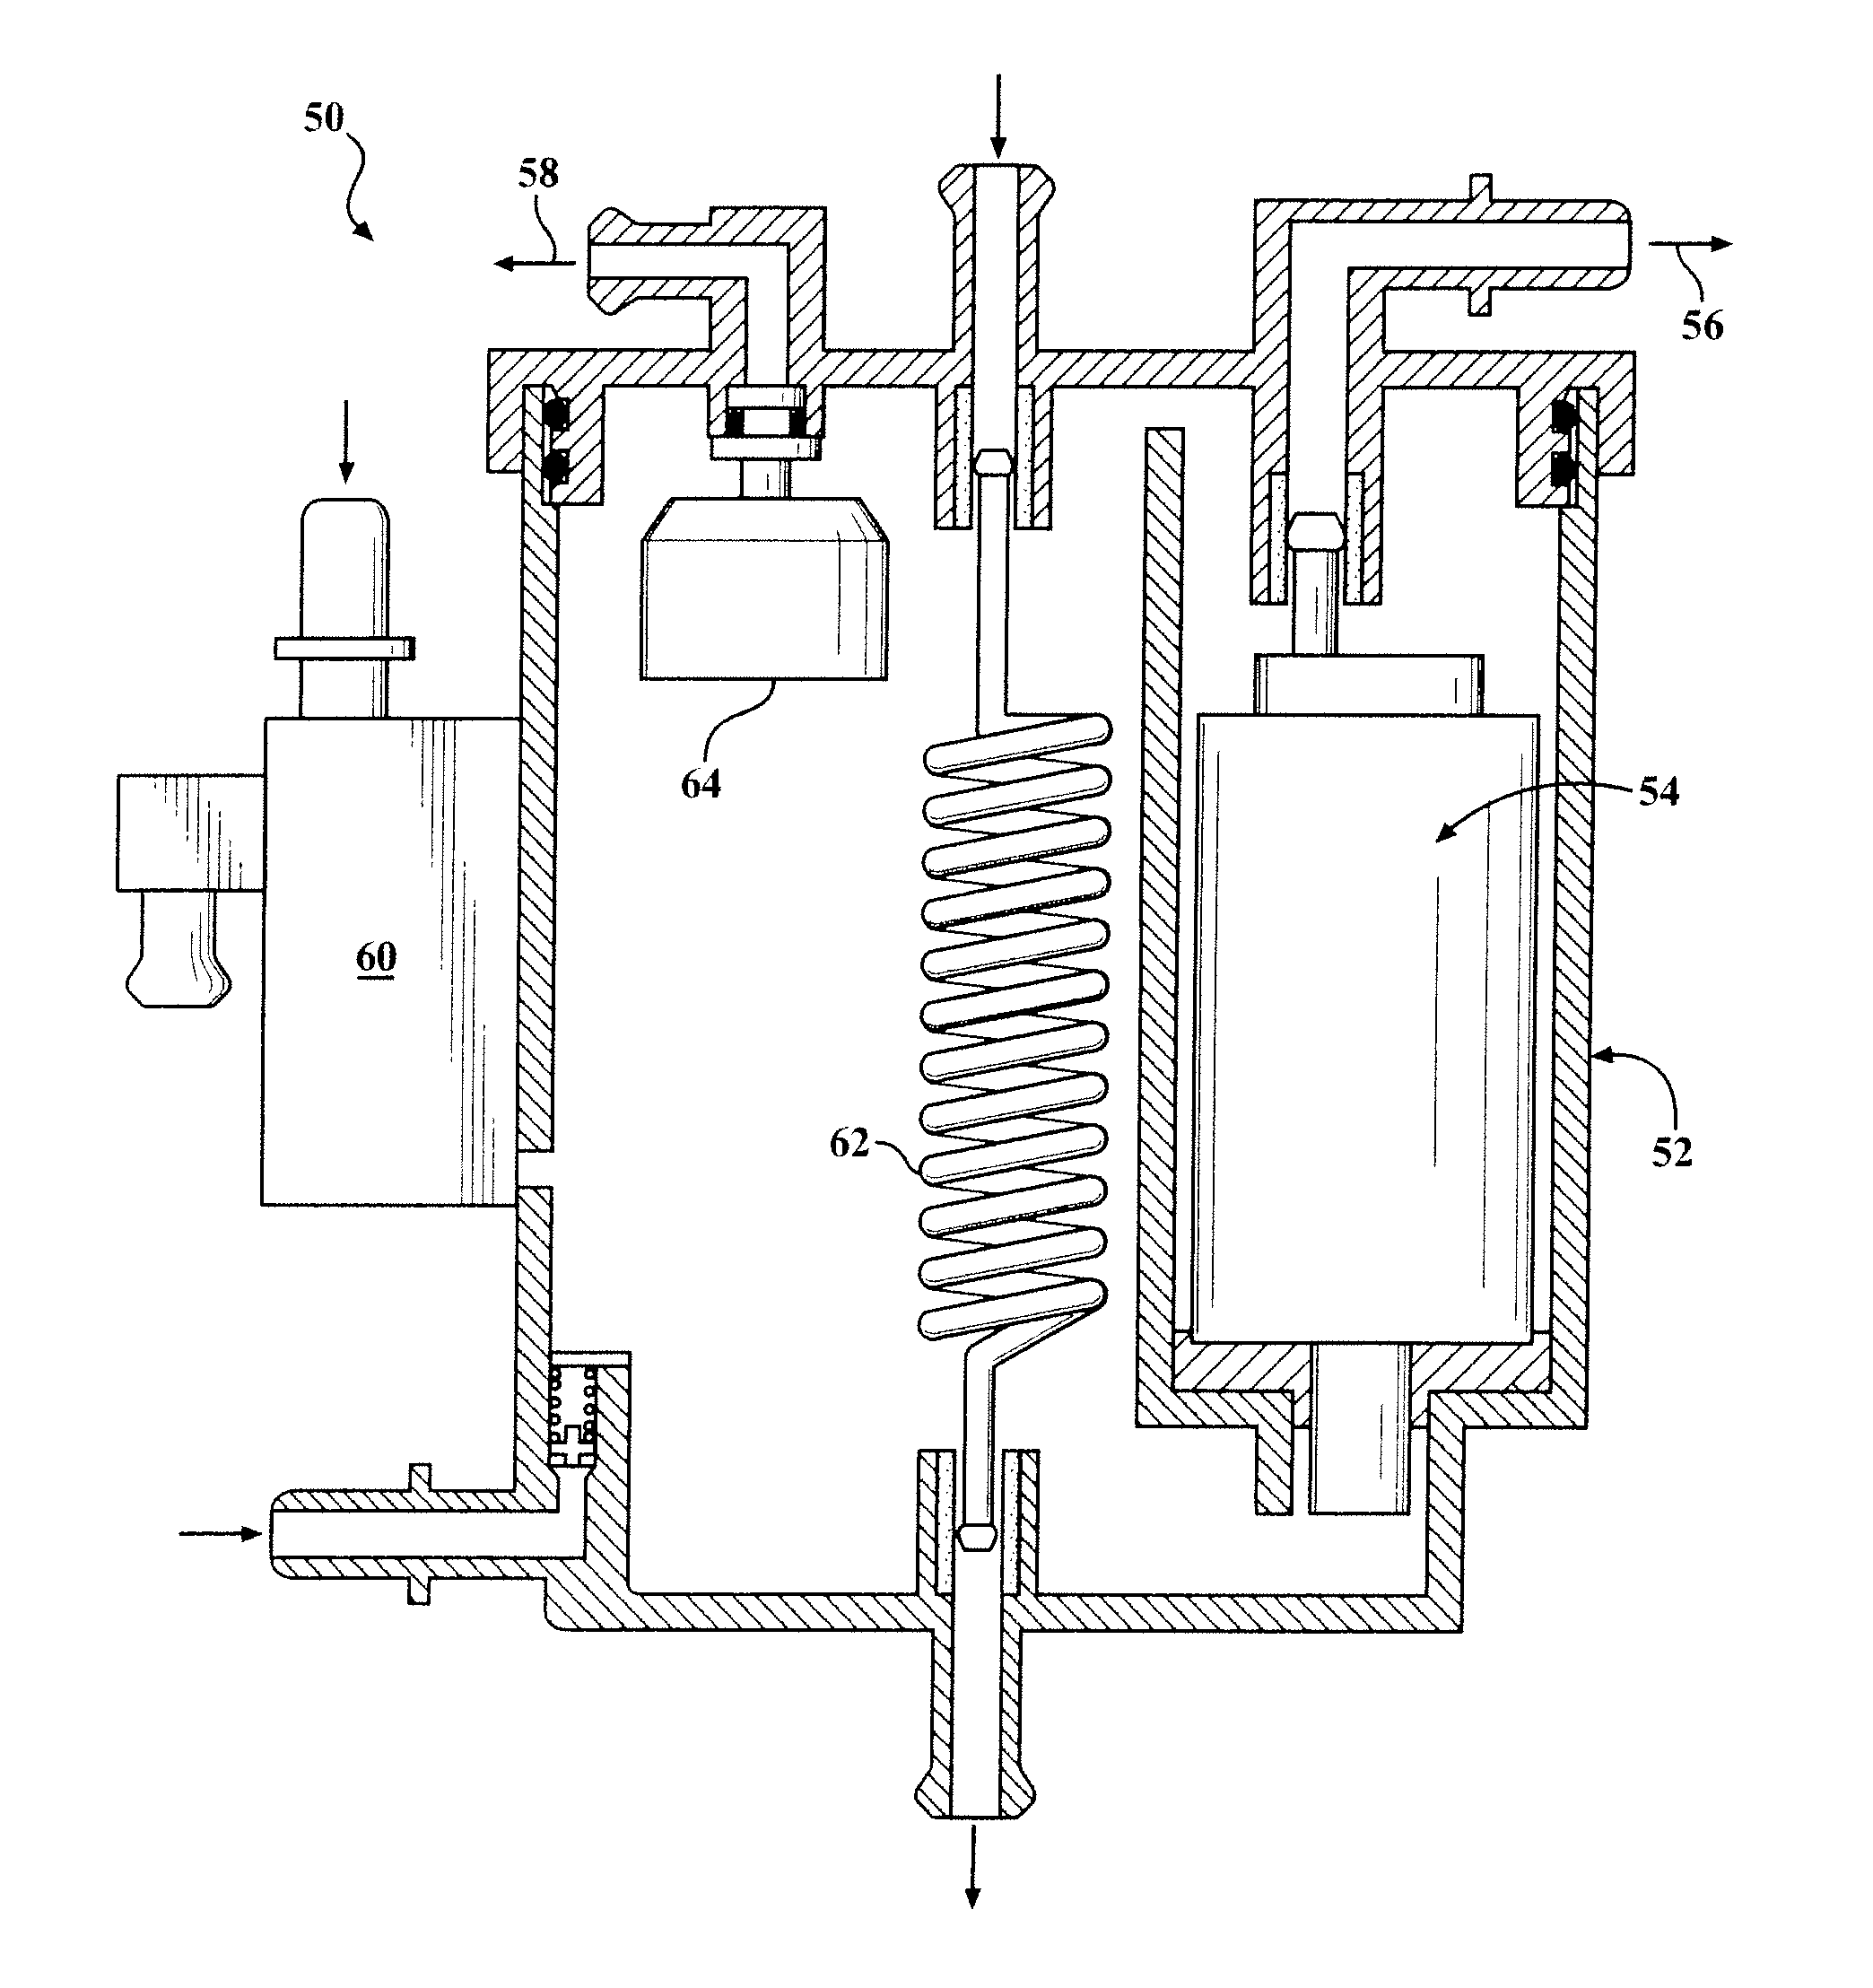 Vapor separator with integral low pressure lift pump